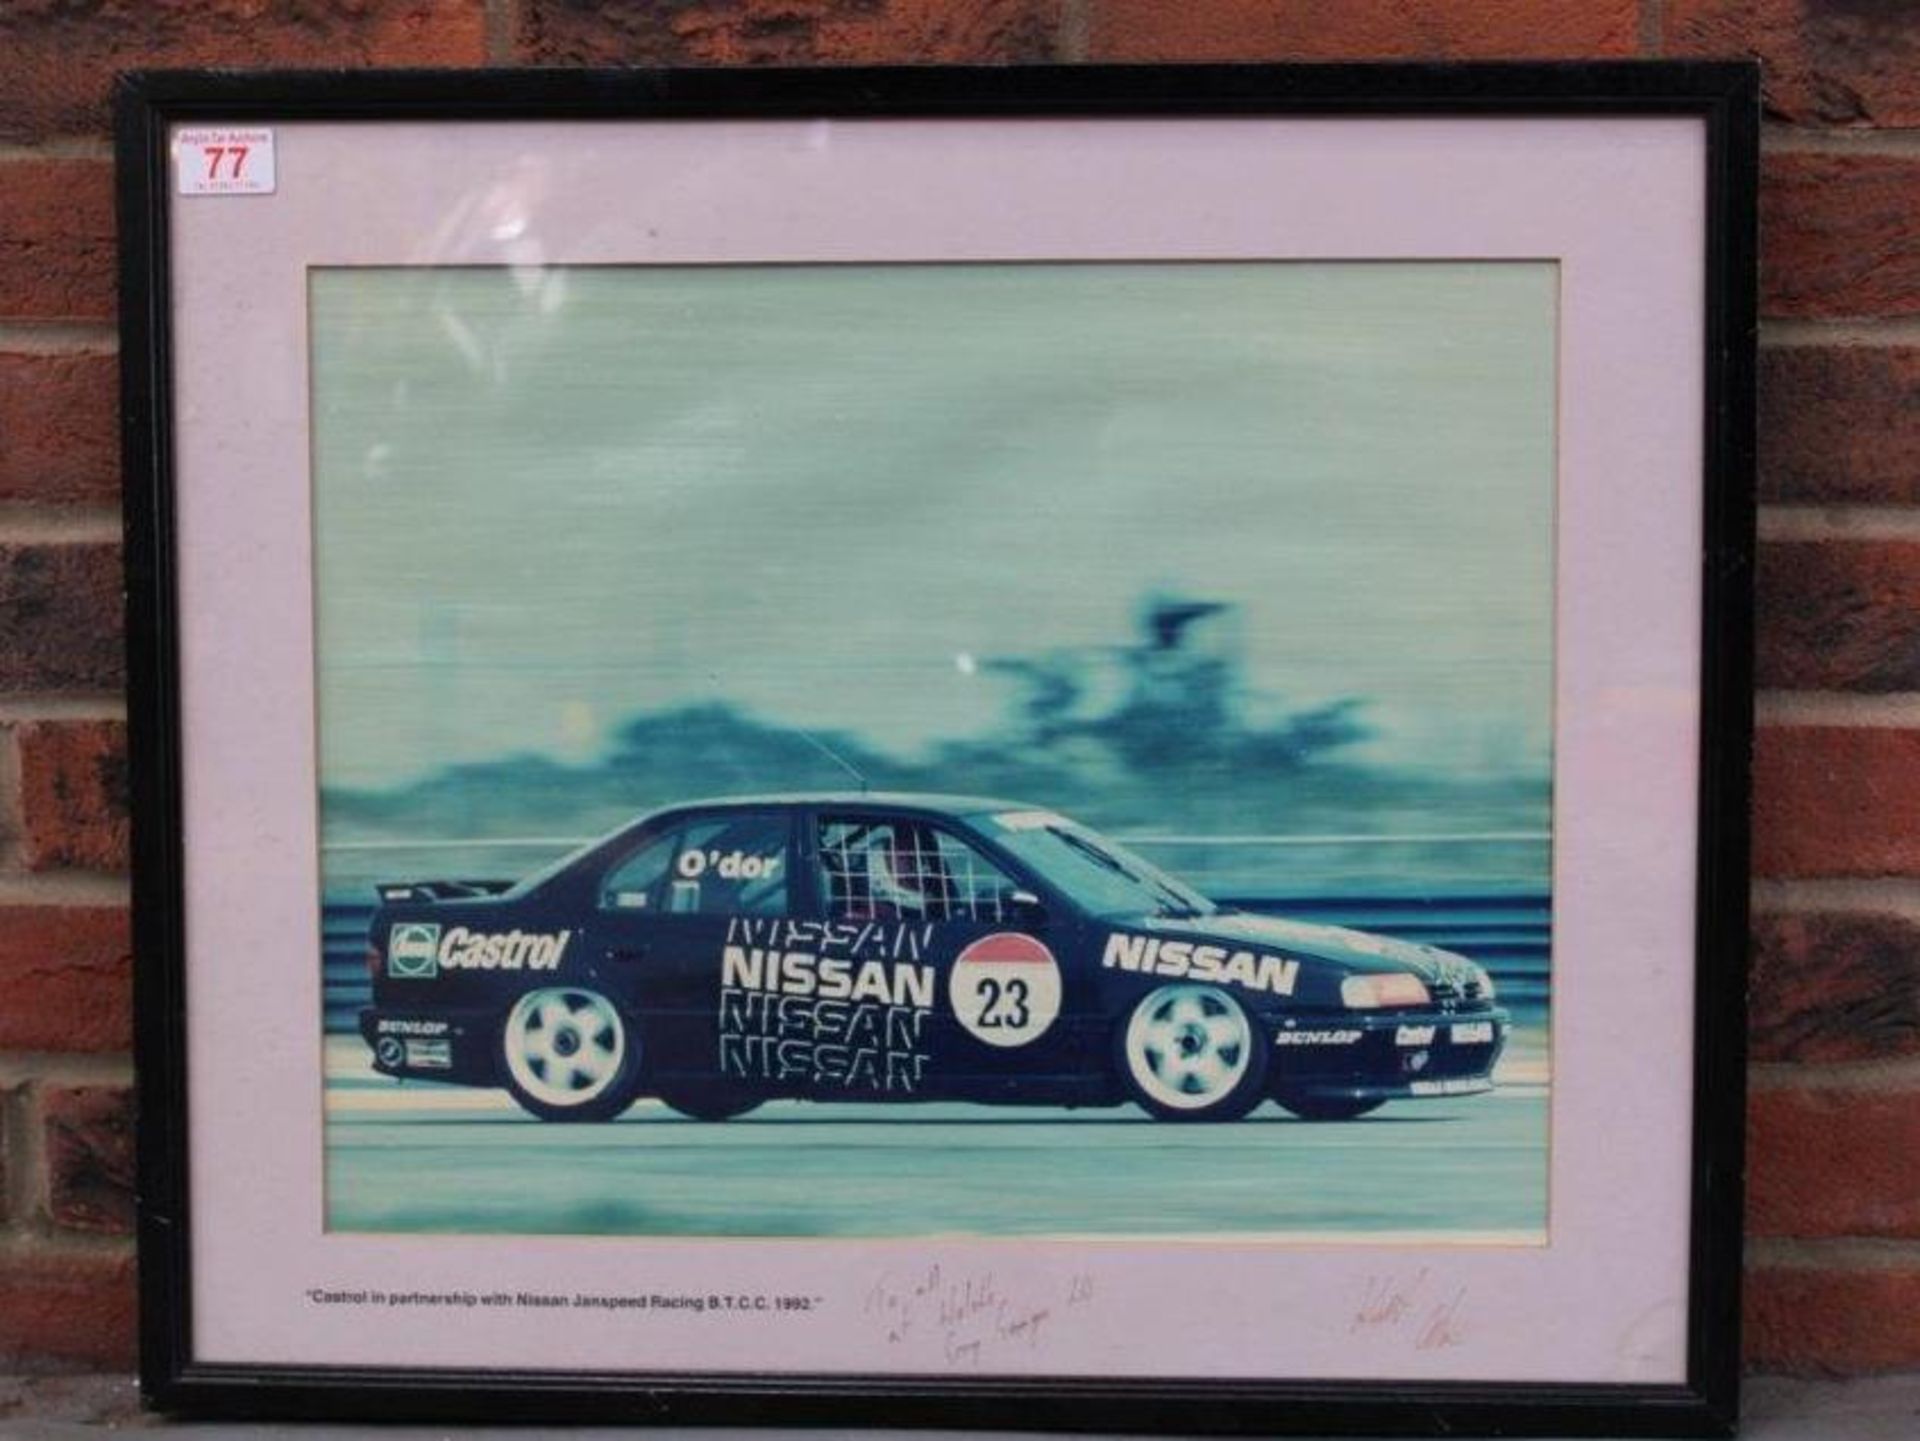 Framed Photograph Of A 1992 Nissan Janspeed Racing Primera Signed